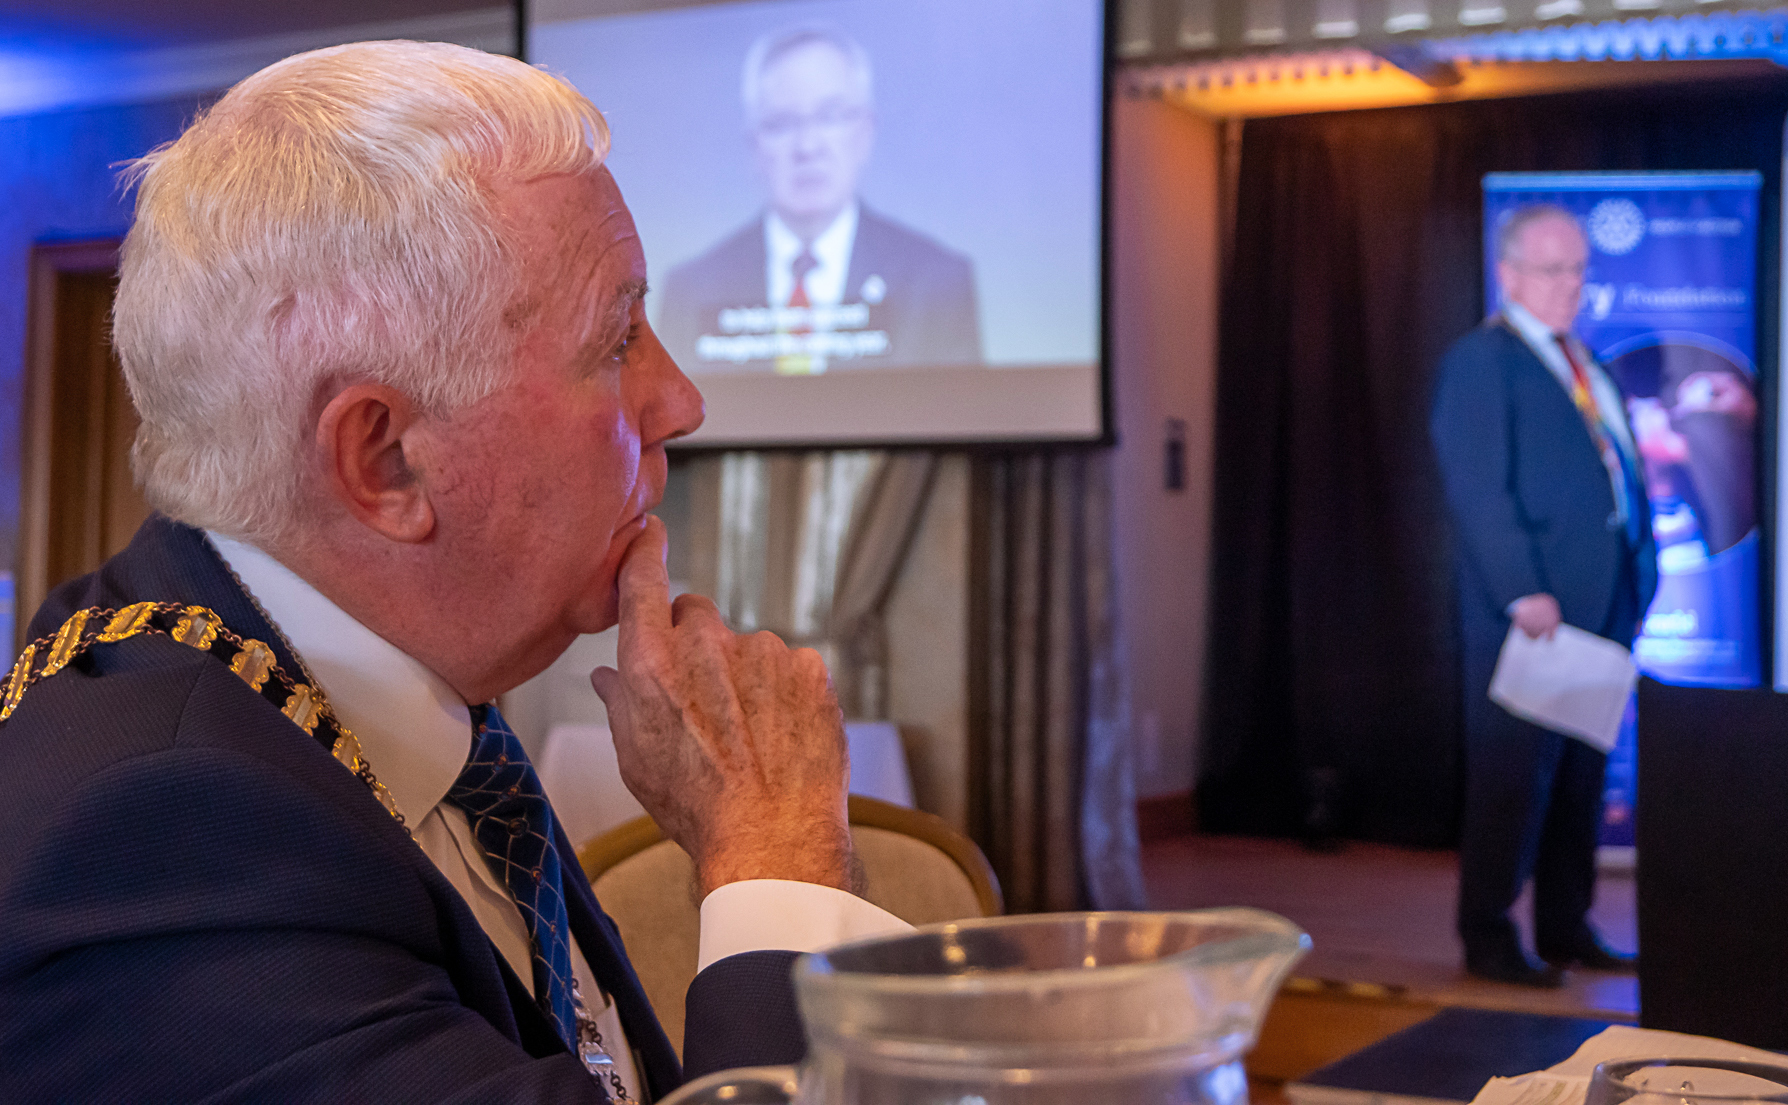 Rotary Club of Enniskillen President Ken Rainey looks on.